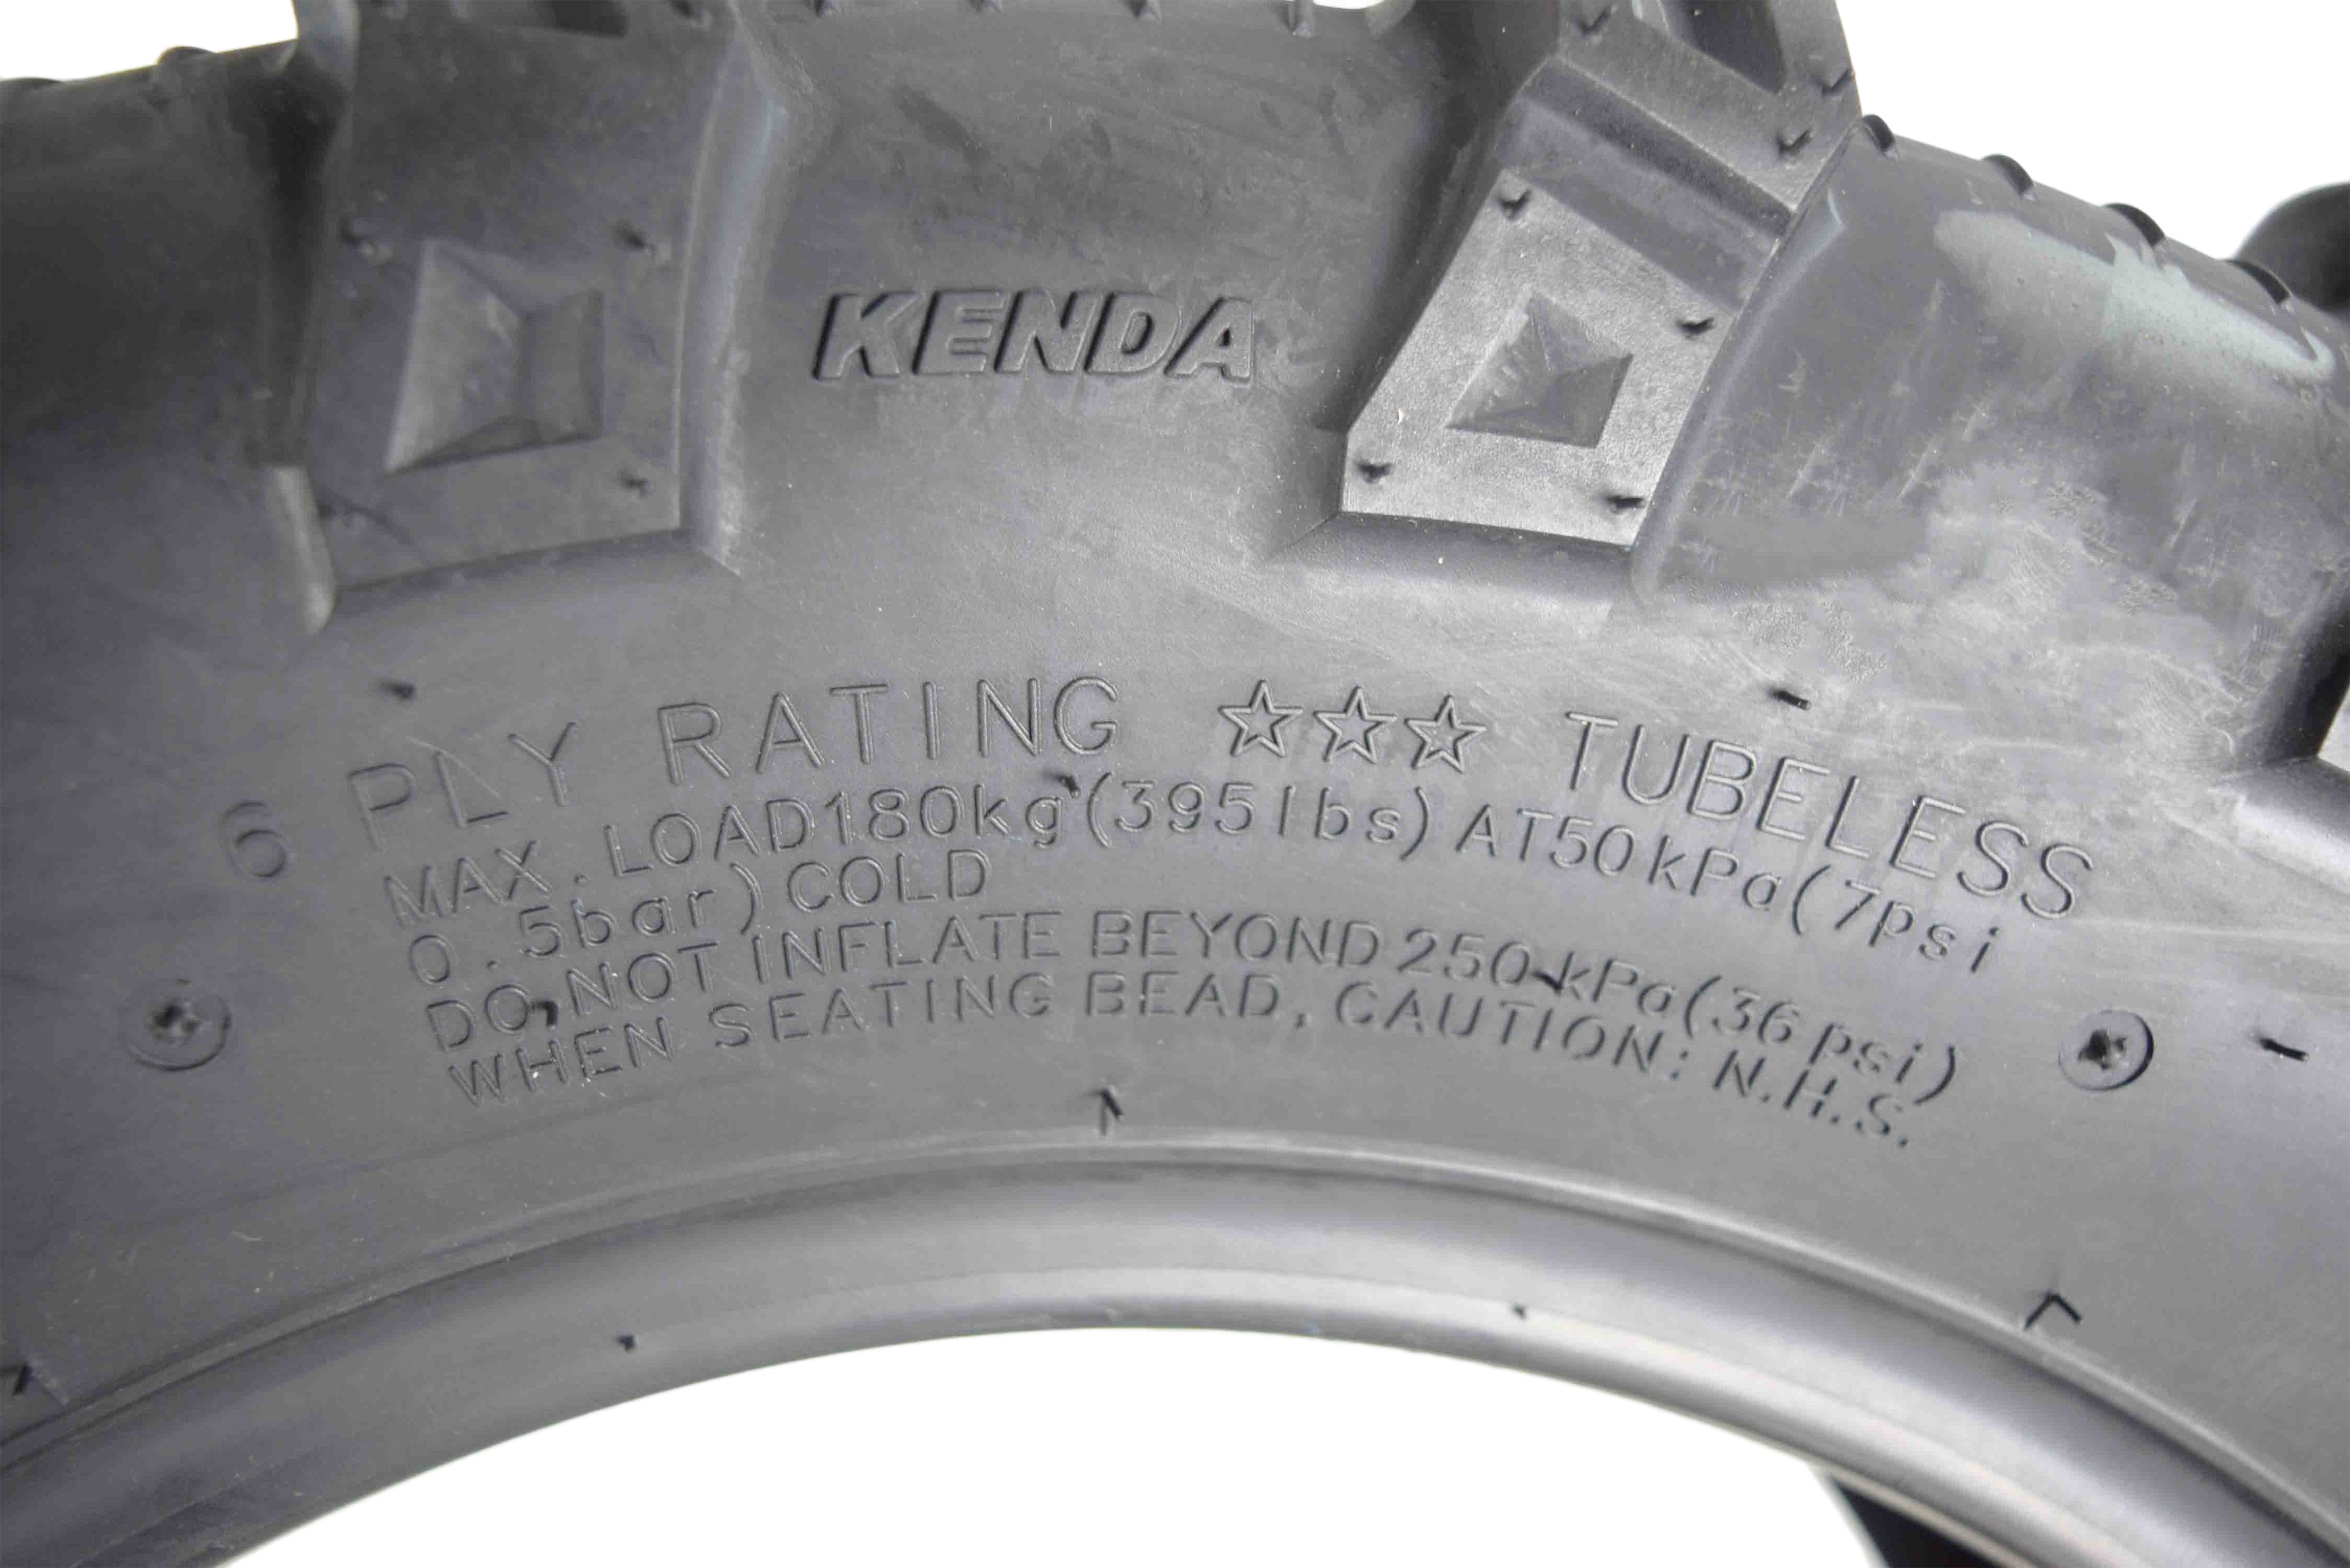 Kenda Bear Claw EVO  26x9-14 Front ATV/UTV Tires 2 Pack with Bottle Opener Keychain